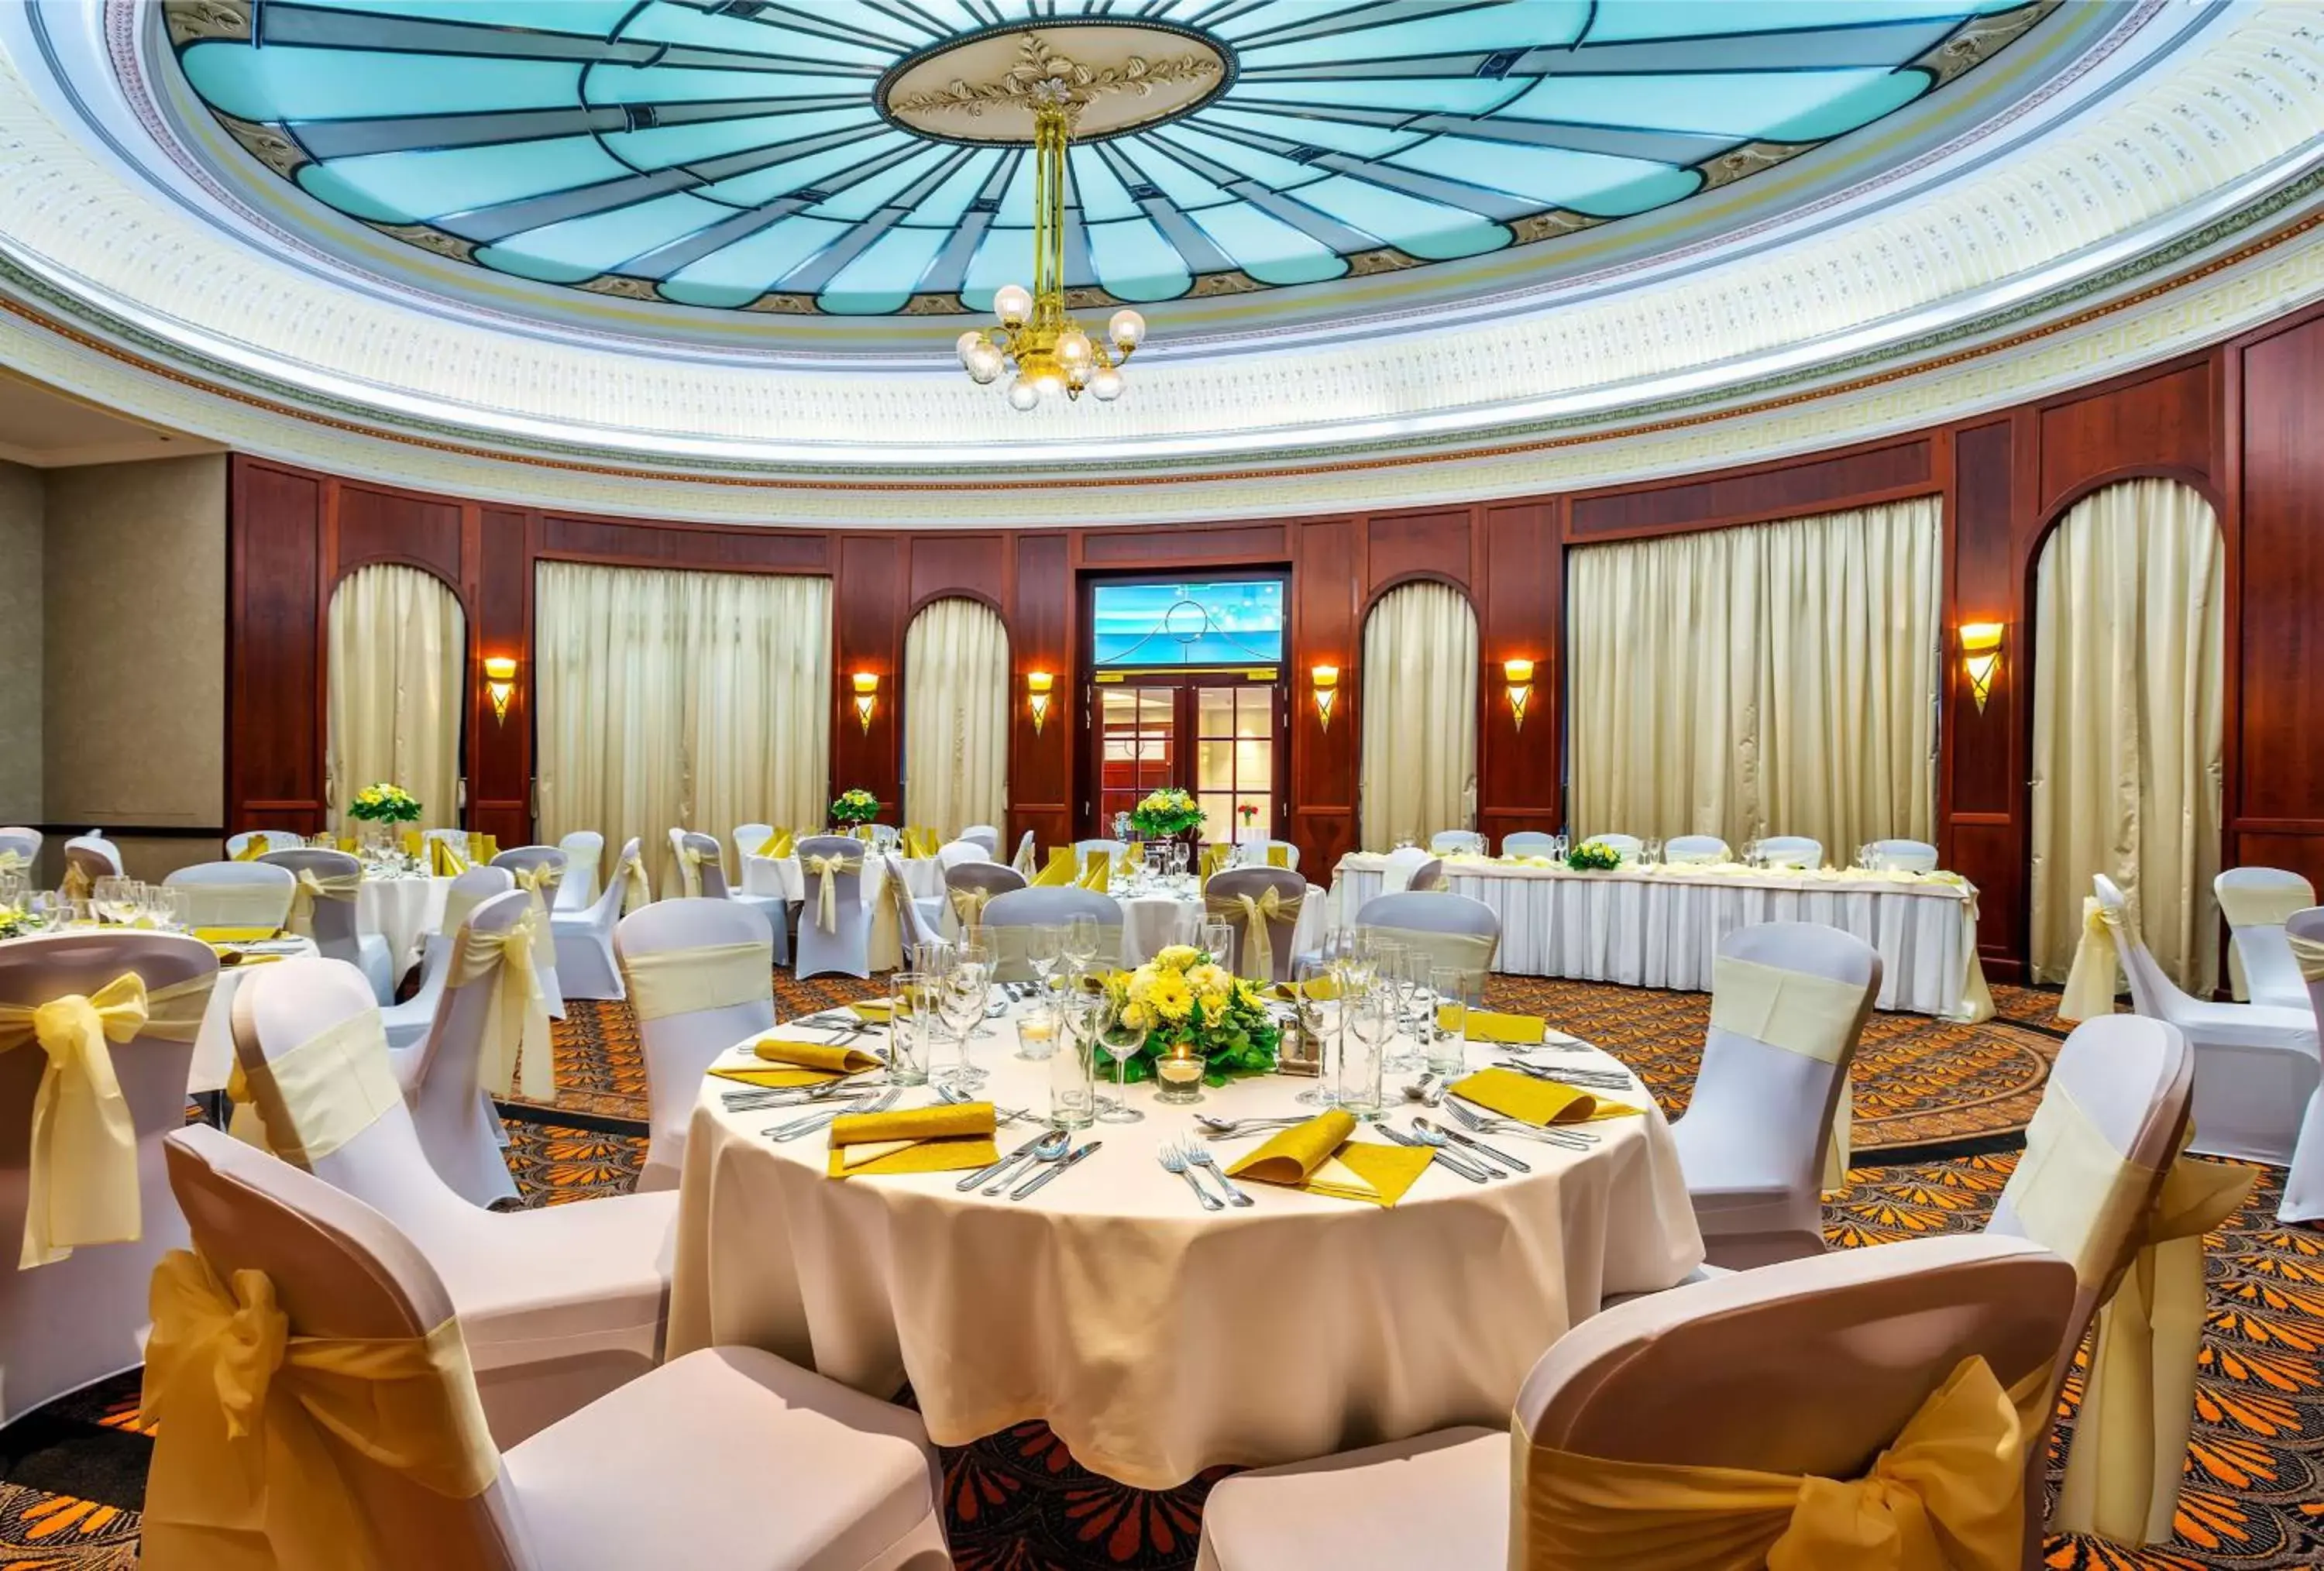 Meeting/conference room, Restaurant/Places to Eat in Radisson Blu Carlton Hotel, Bratislava